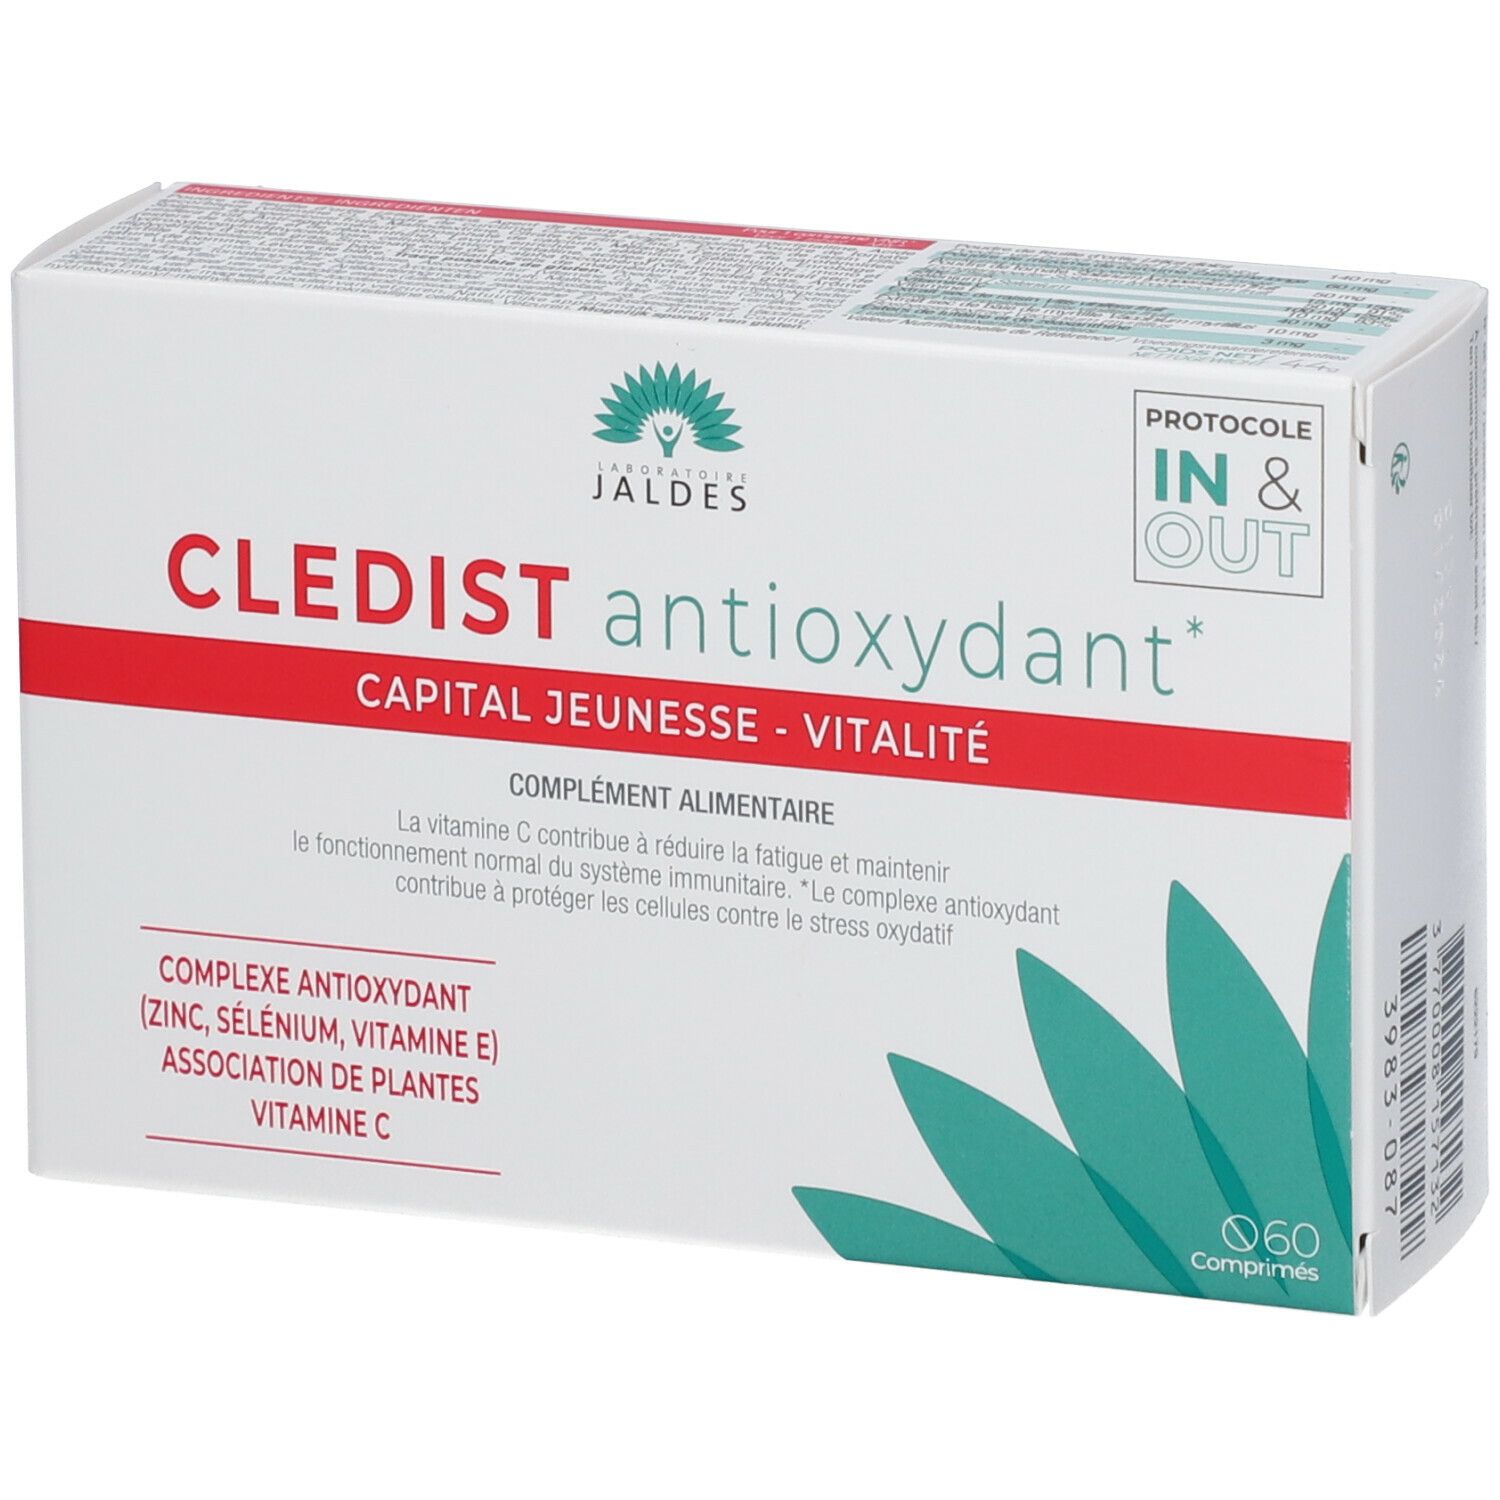 Cledist Antioxydant